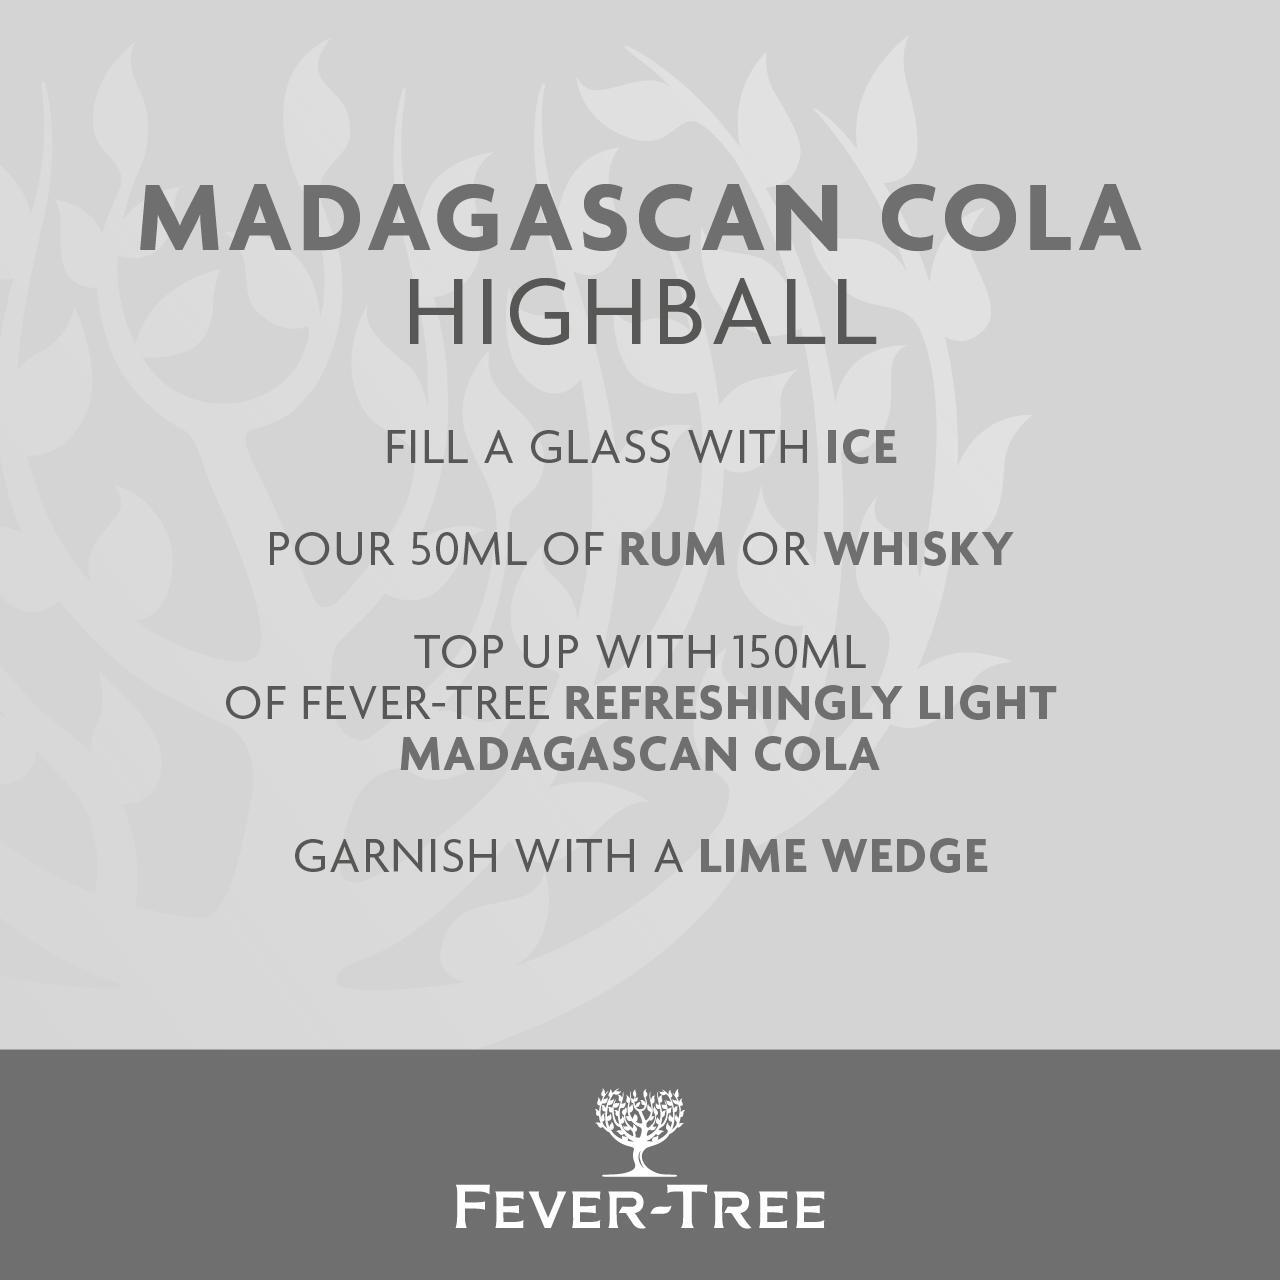 Fever-Tree Refreshingly Light Madagascan Cola 500ml